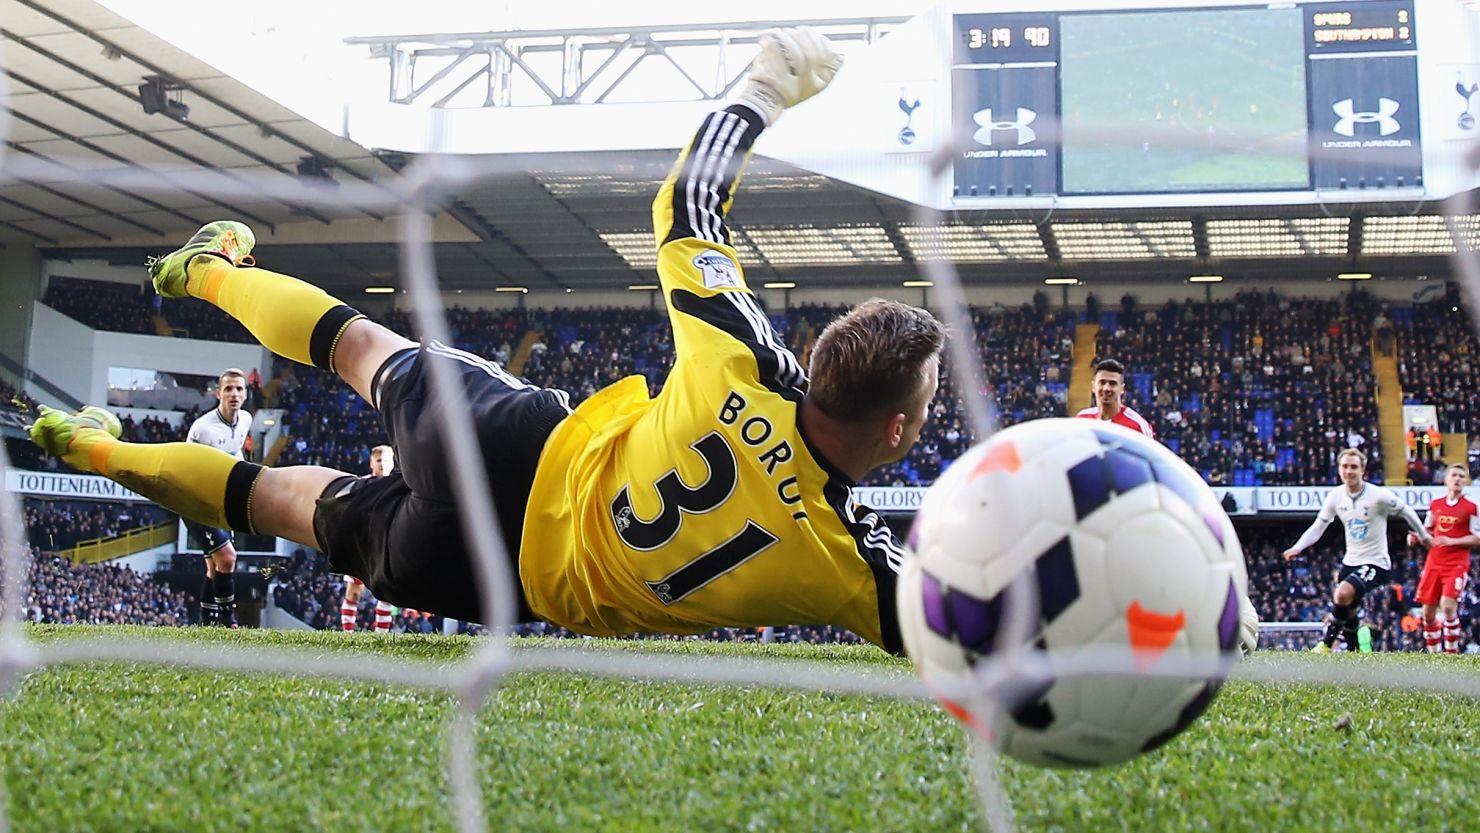 Southampton's Artur Boruc had no chance on Tottenham's winning goal in the Premier League on Sunday. 